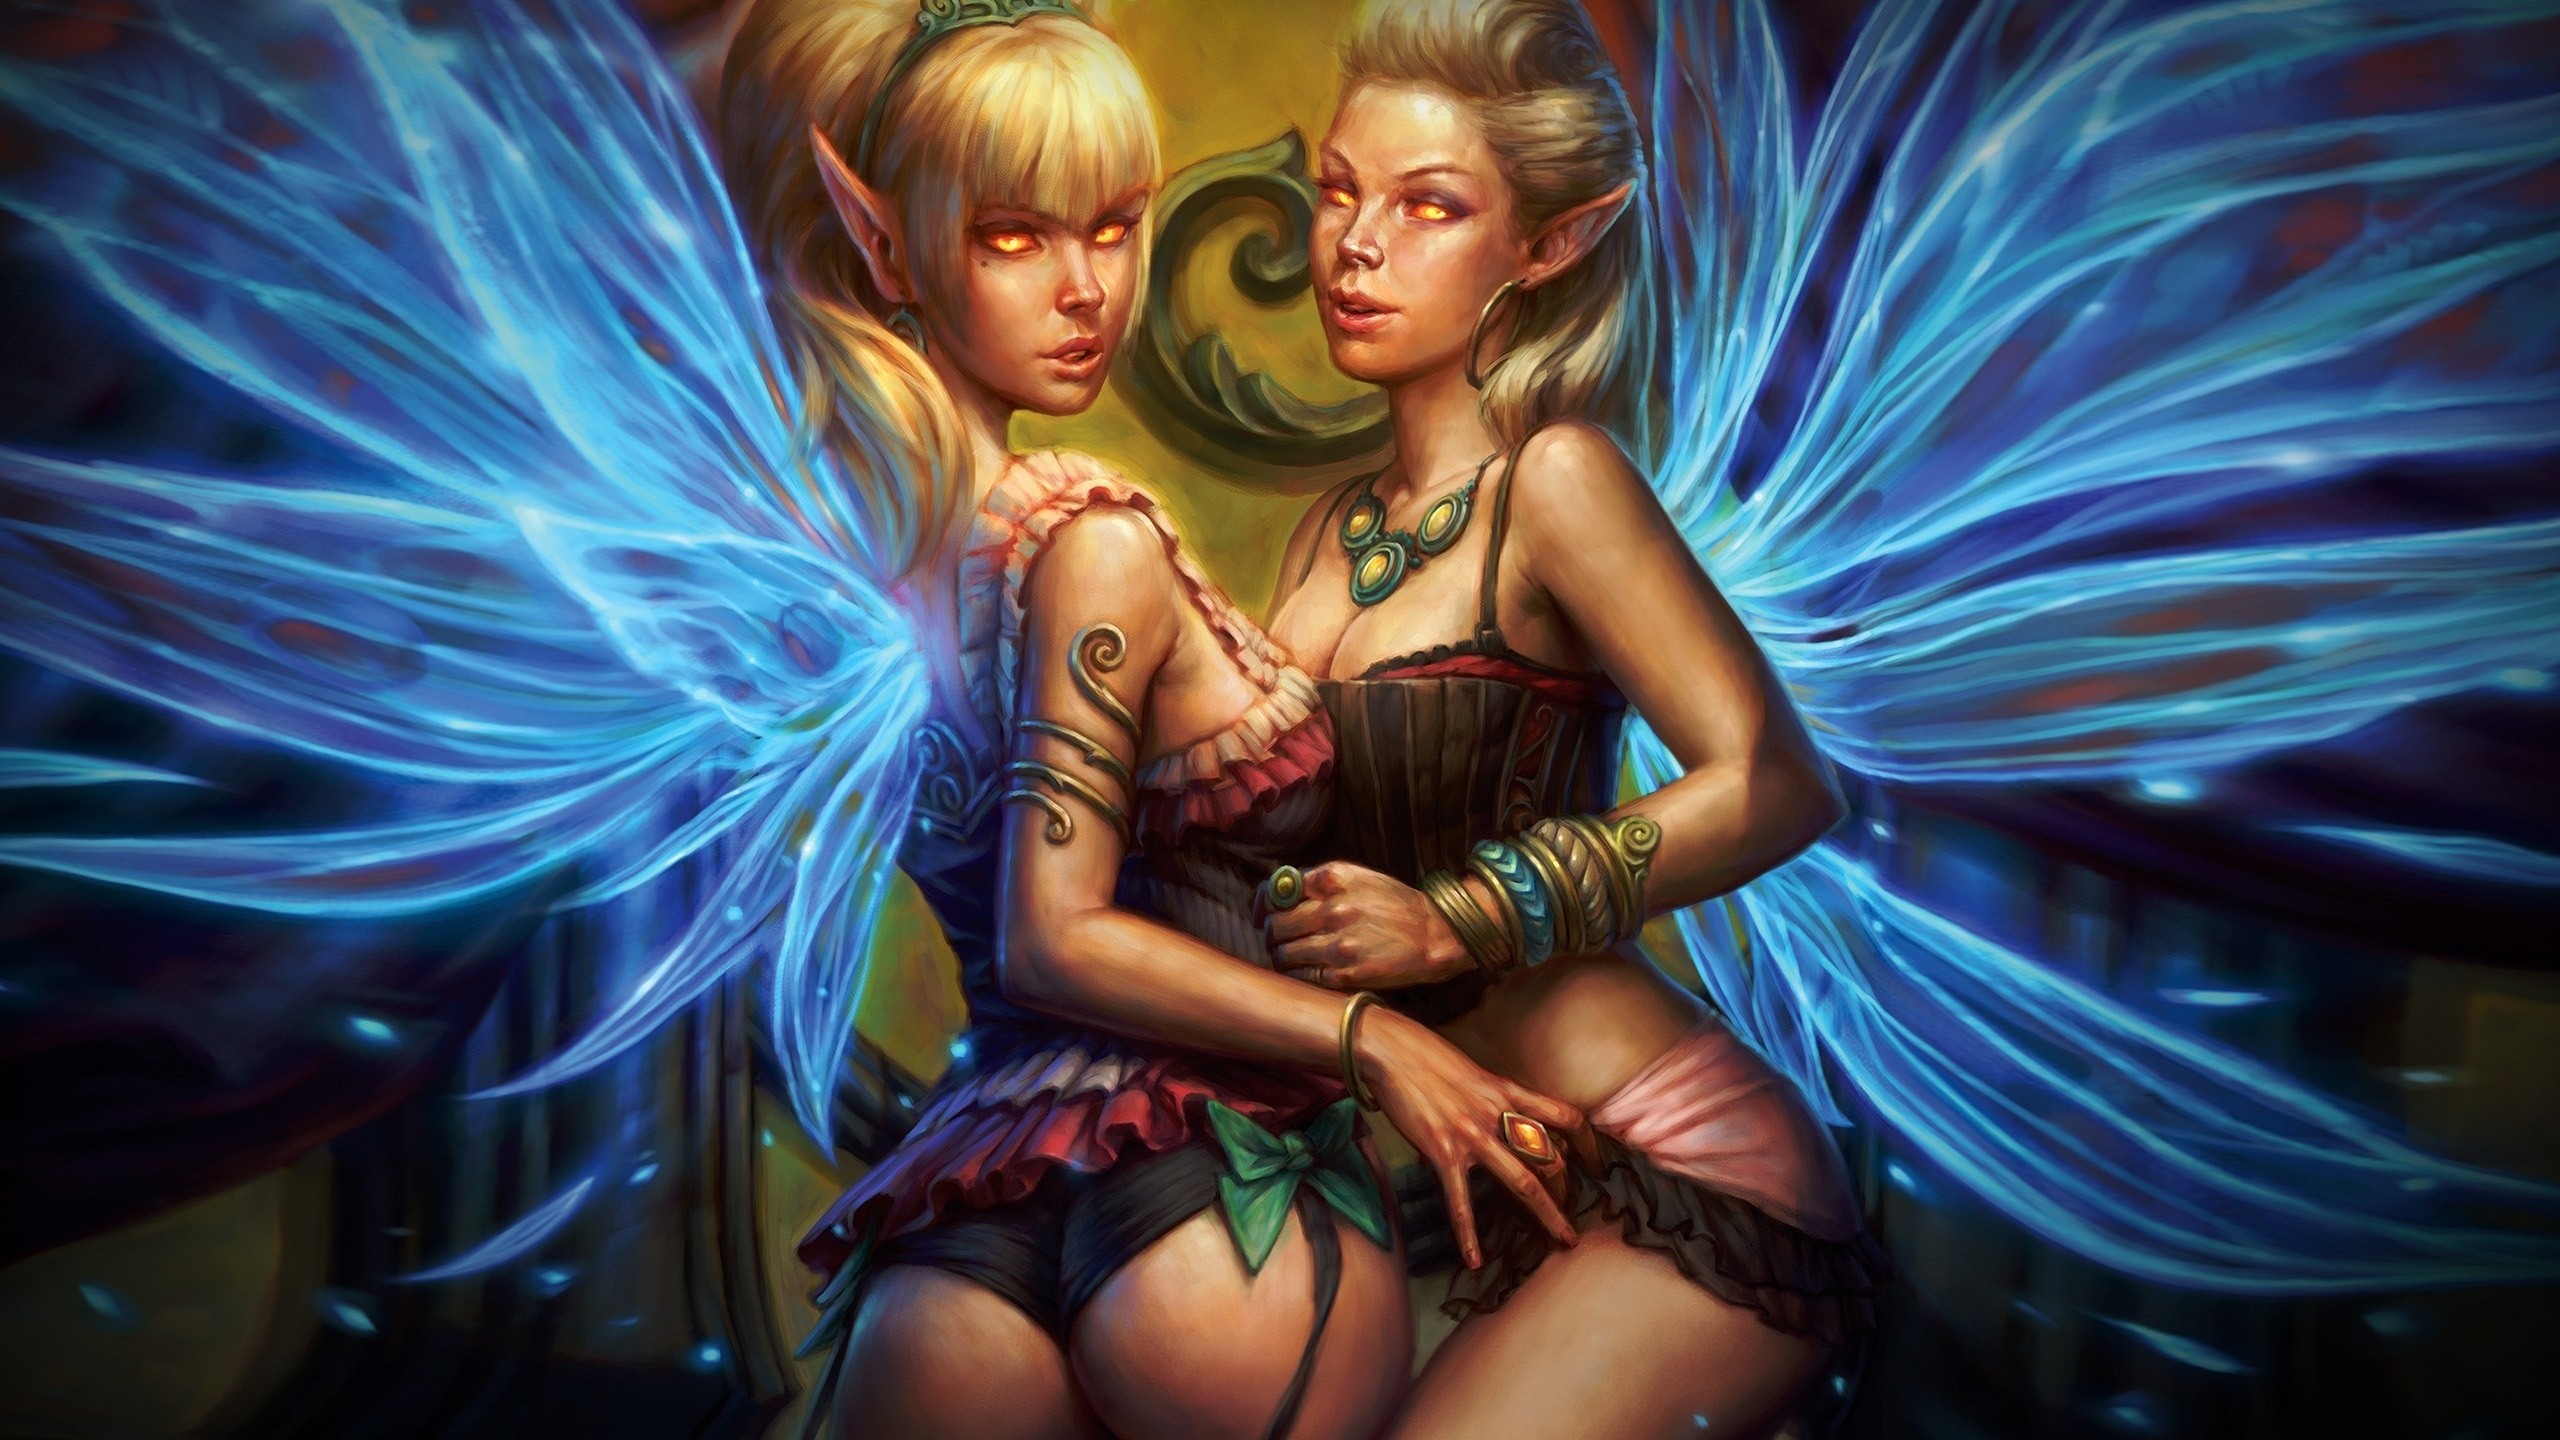 General 2560x1440 allods online wood elves ass glowing eyes blonde wings fantasy girl PC gaming women